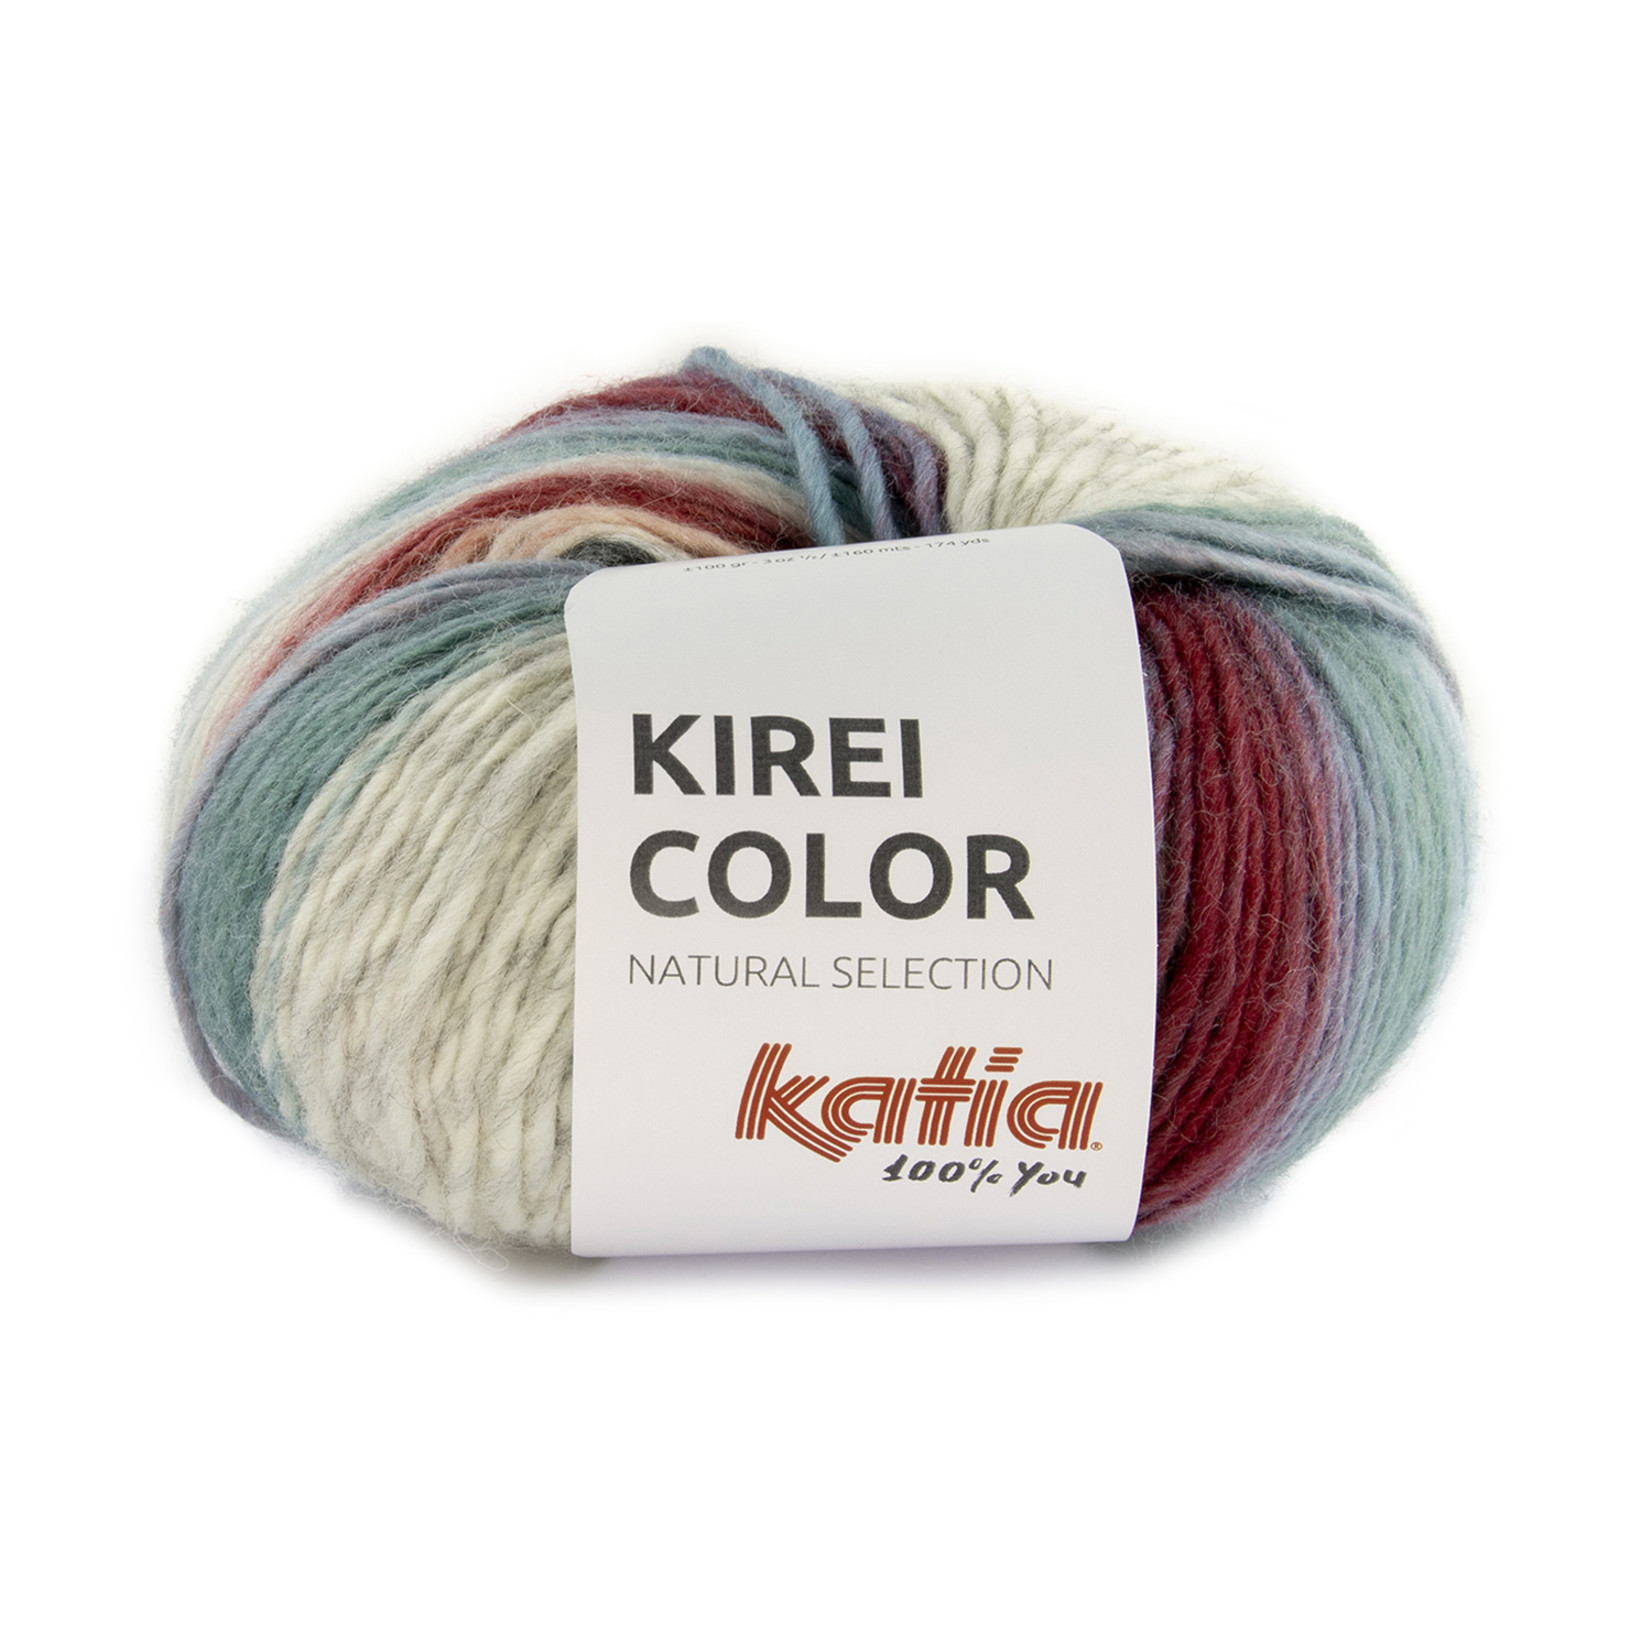 Katia Kirei Color 305 Roest-Parelmoer-Lichtgrijs-Blauw